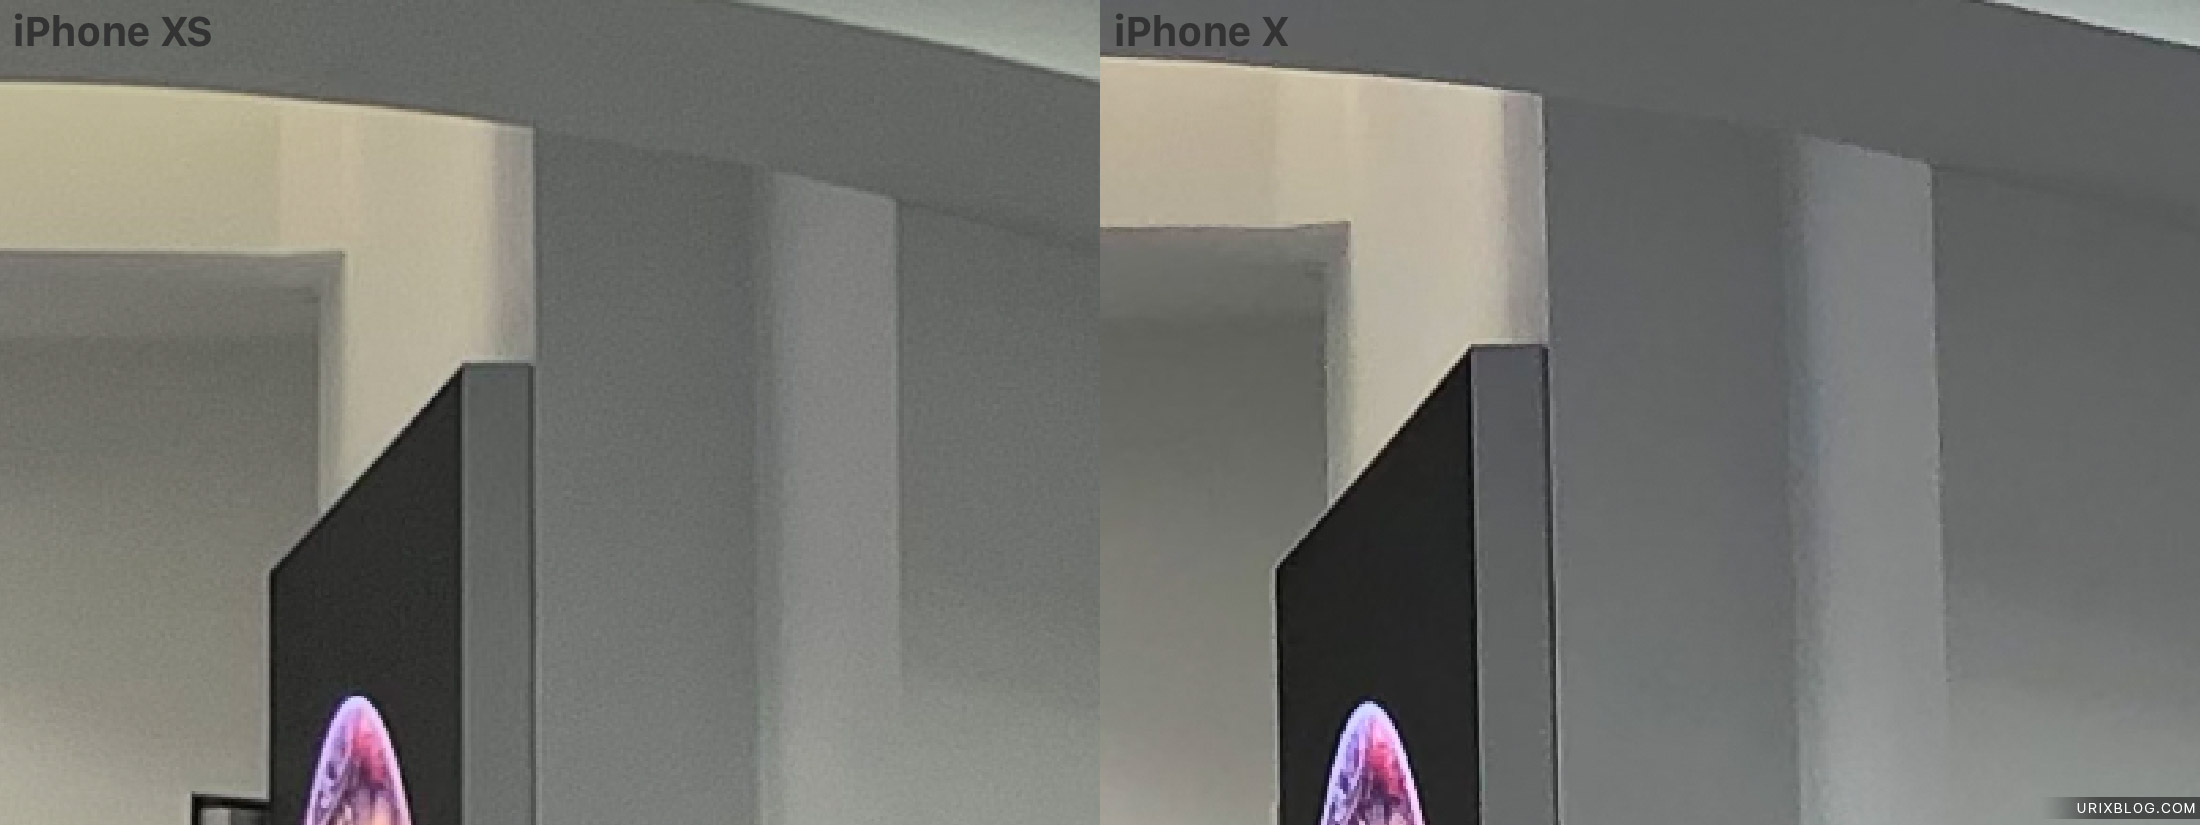 iPhone XS, iPhone X, Apple, camera, comparison, review, details